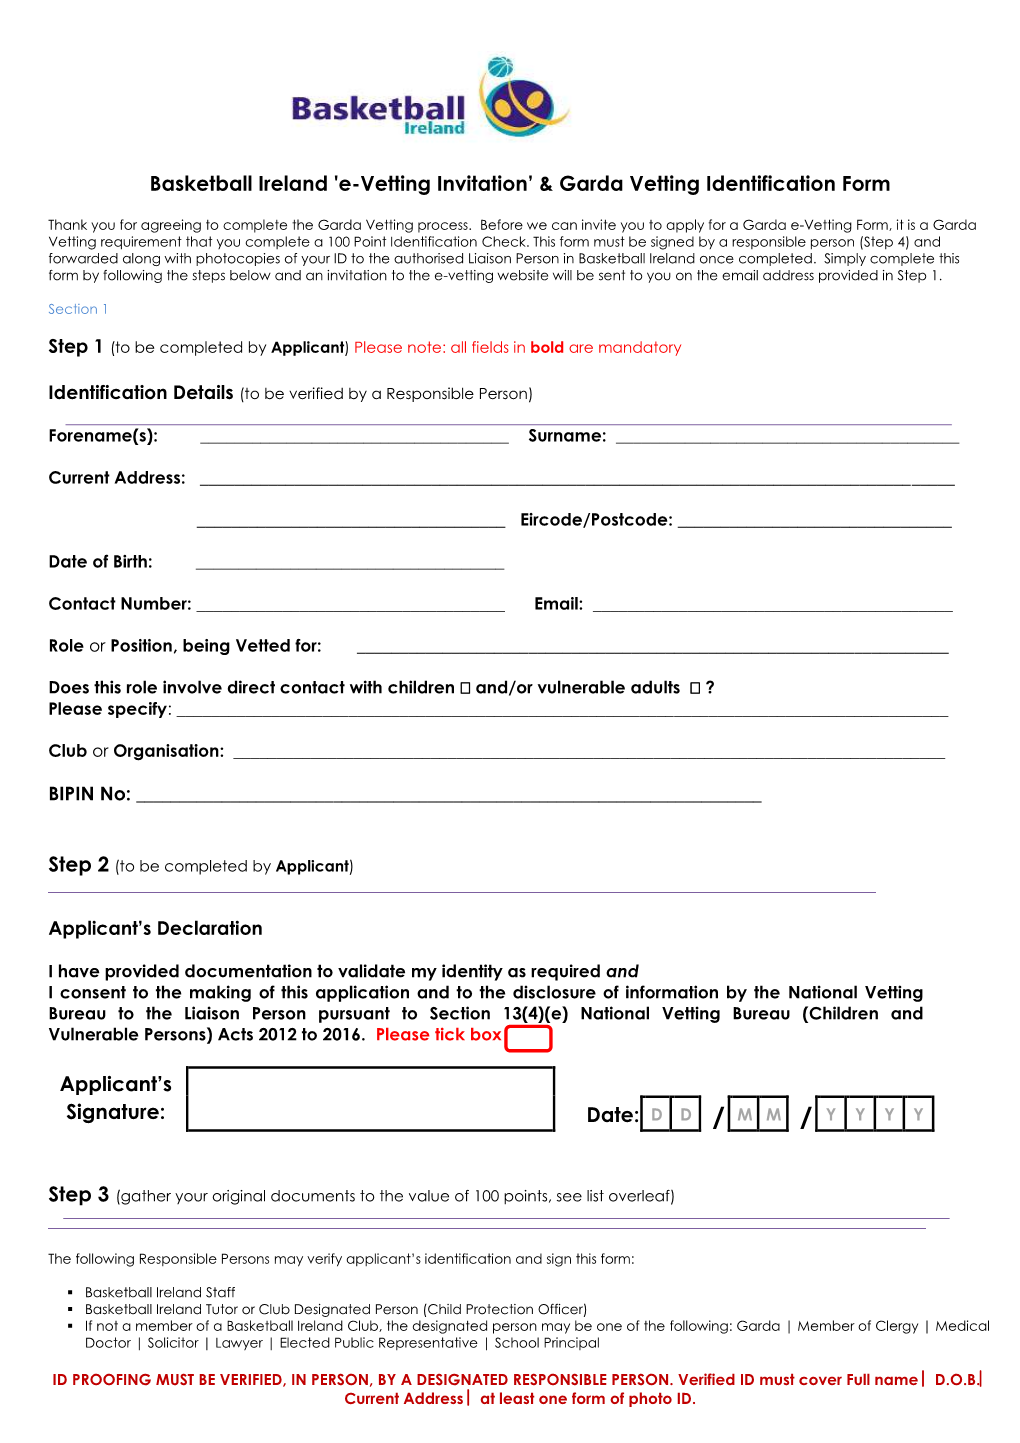 Garda Vetting Identification Form Applicant's Signature